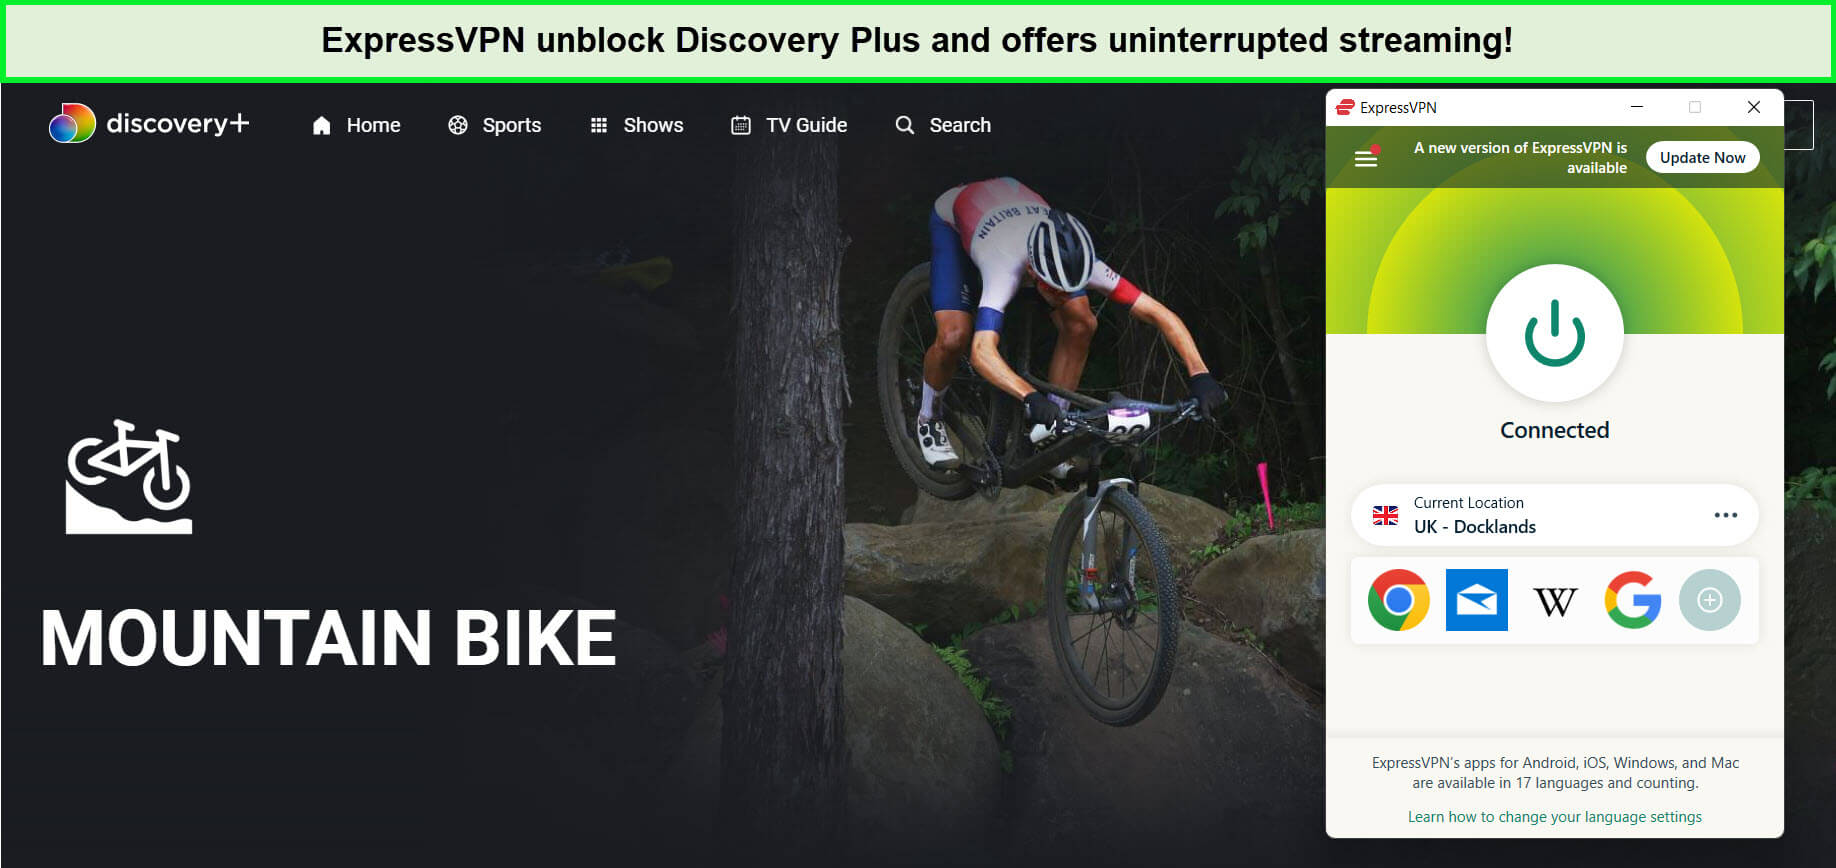 expressvpn-unblocks-uci-mountain-bike-world-series-in-Australia-discovery-plus